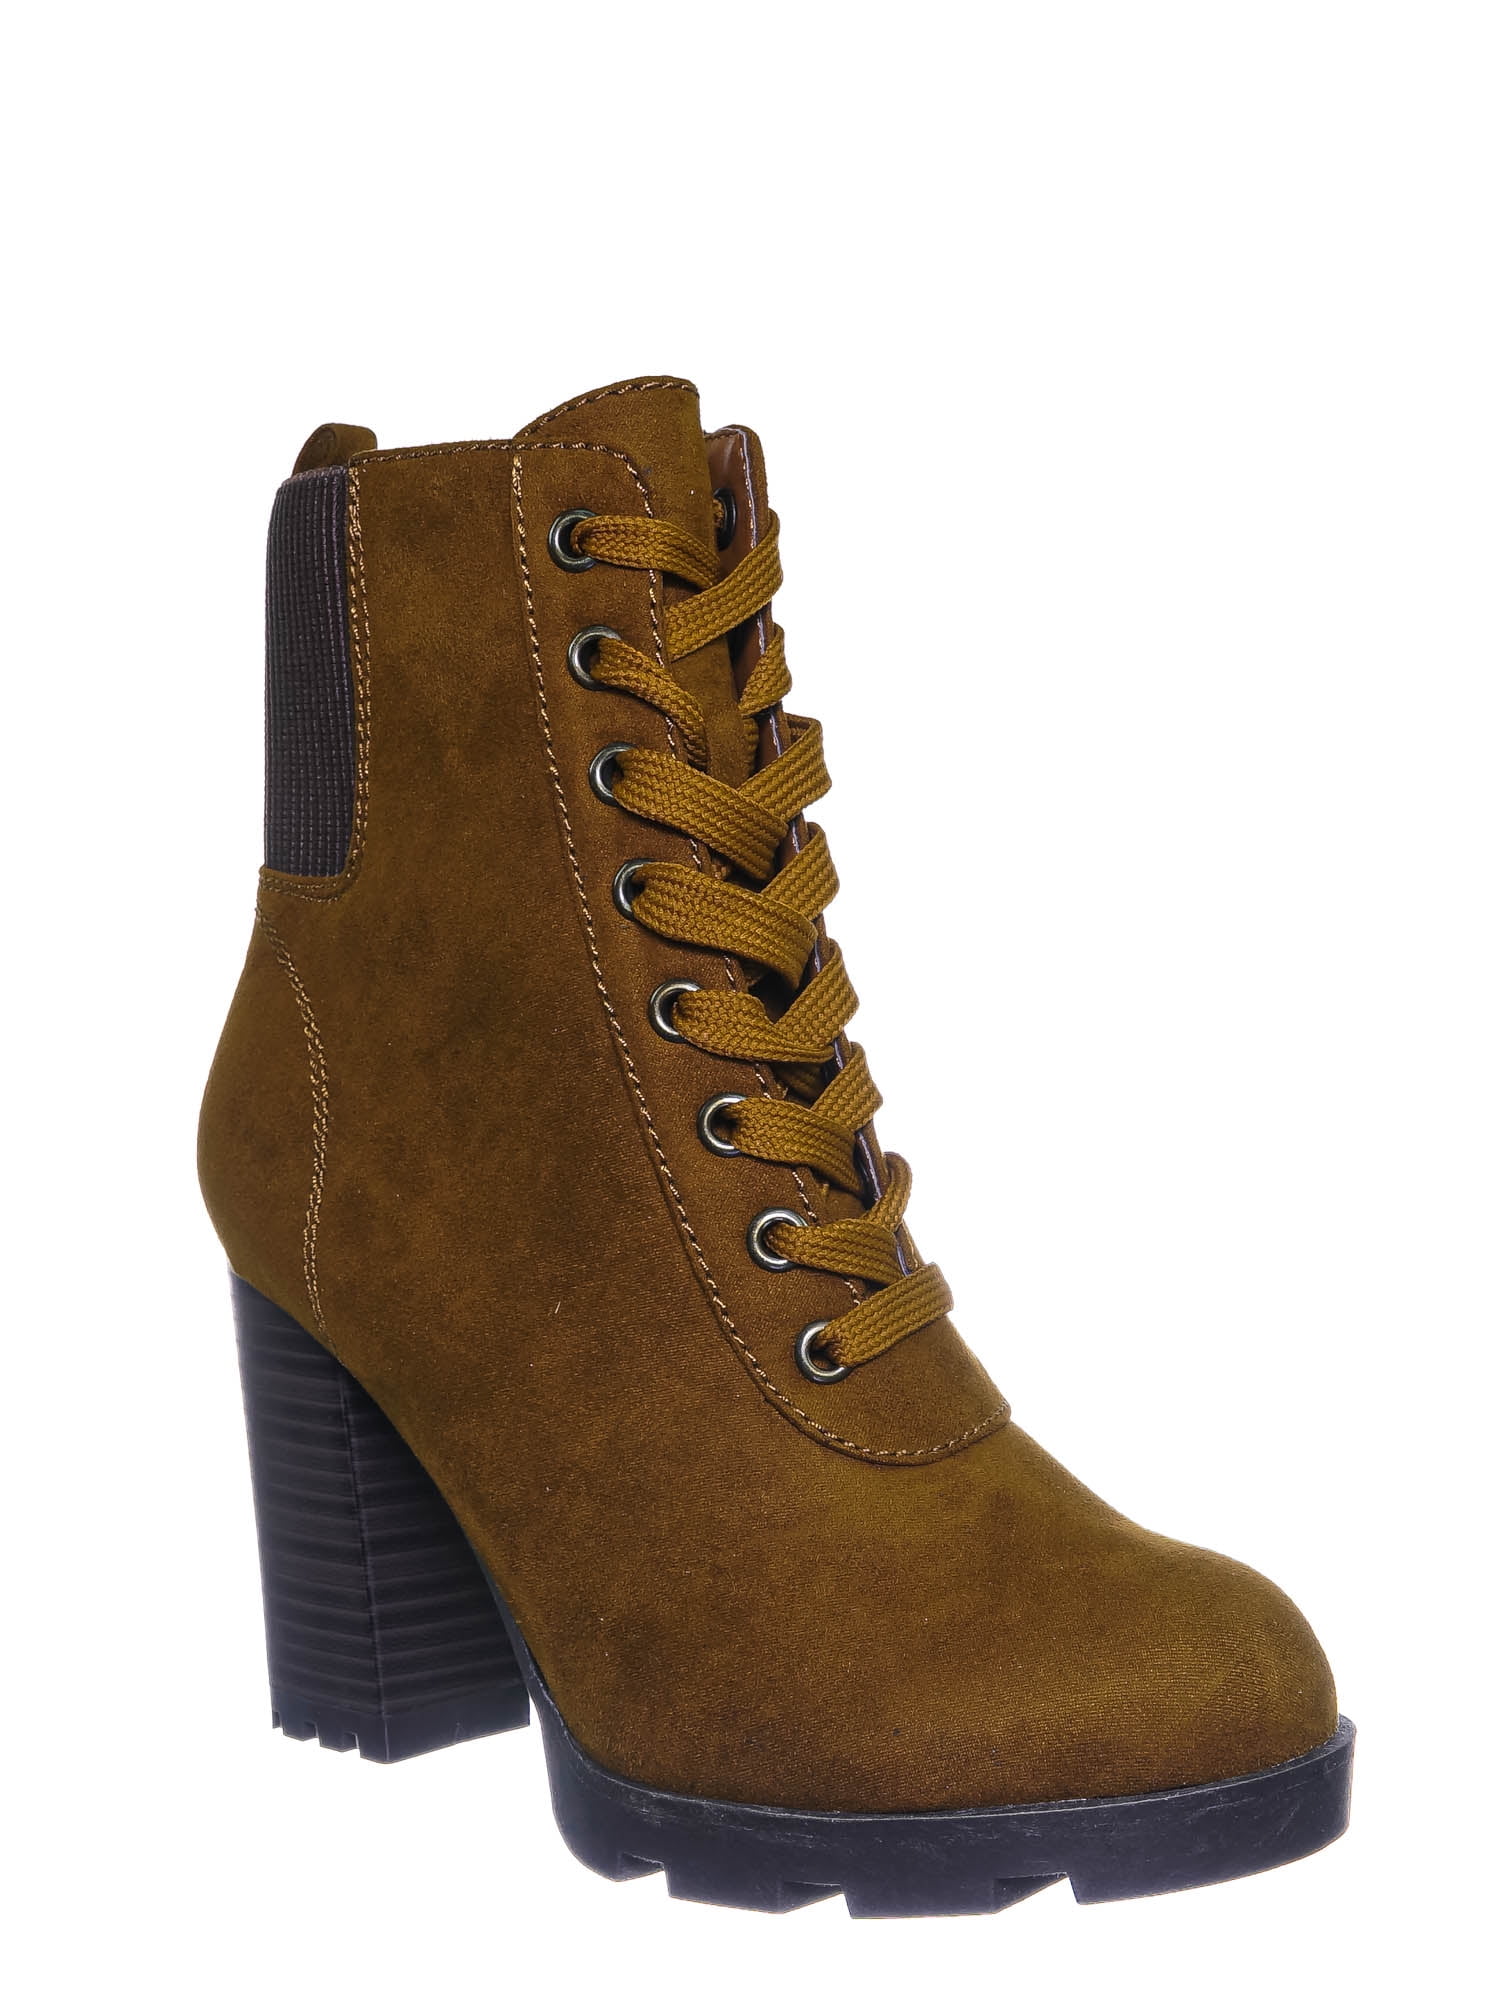 liliana boots wholesale